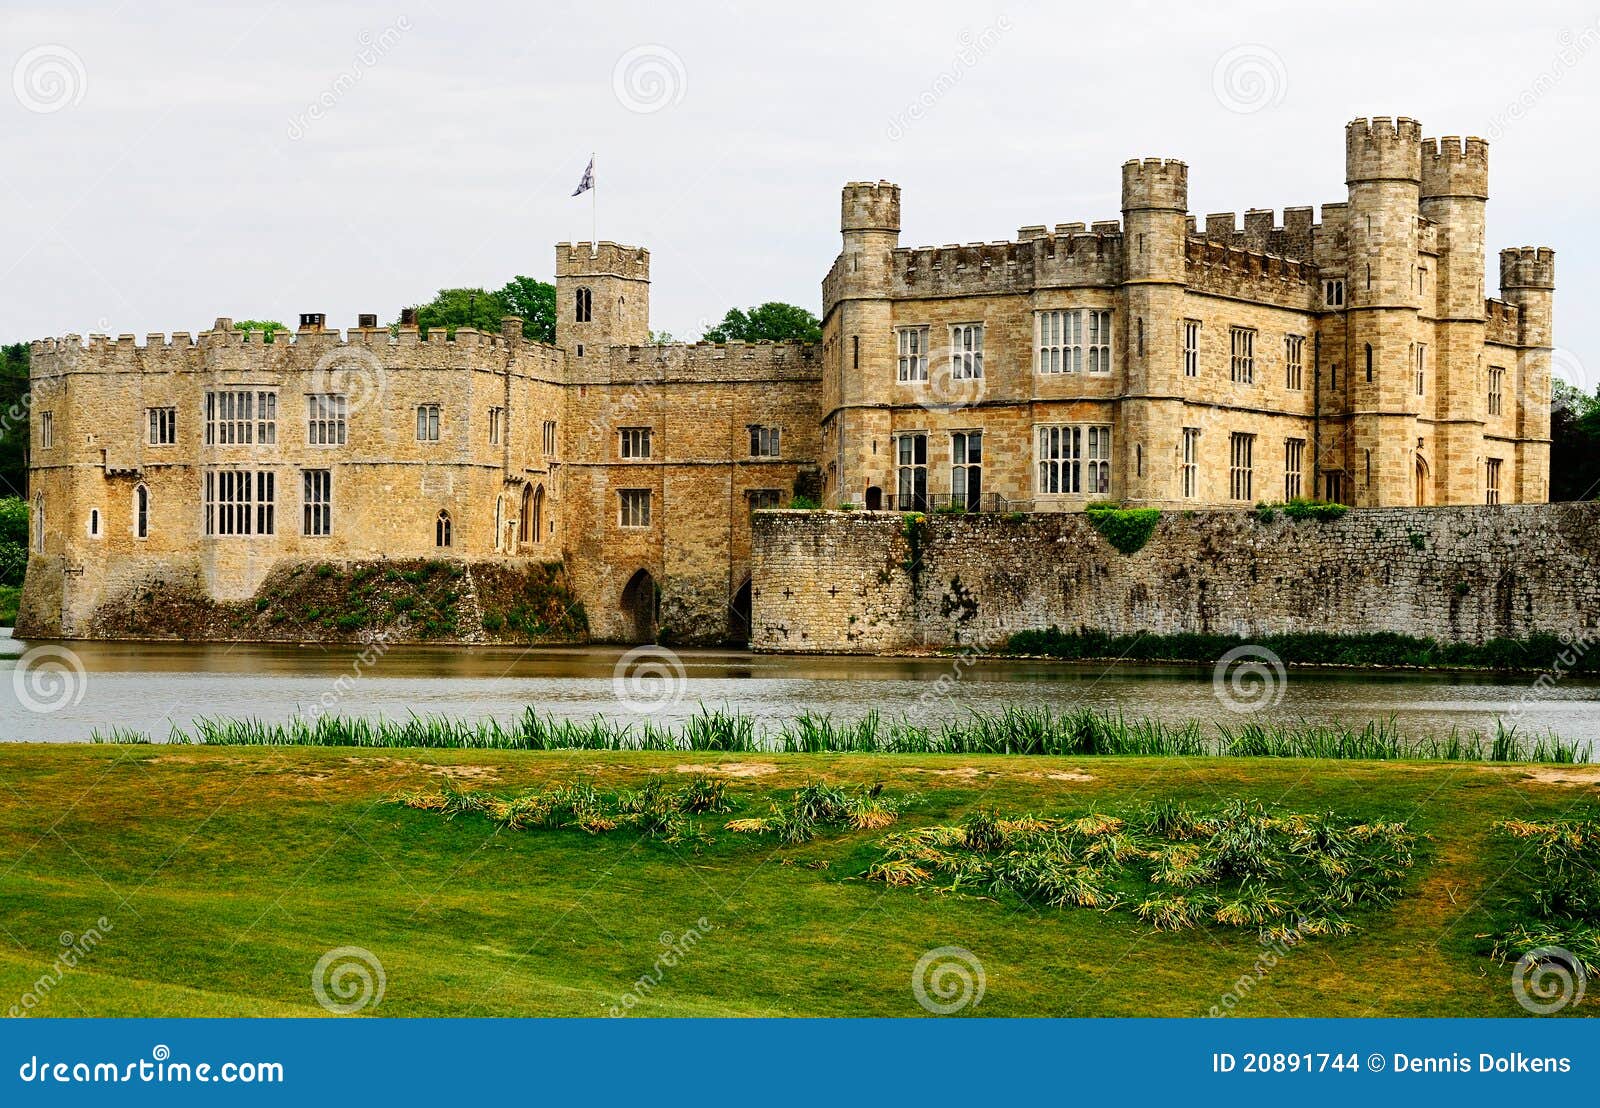 leeds castle, england